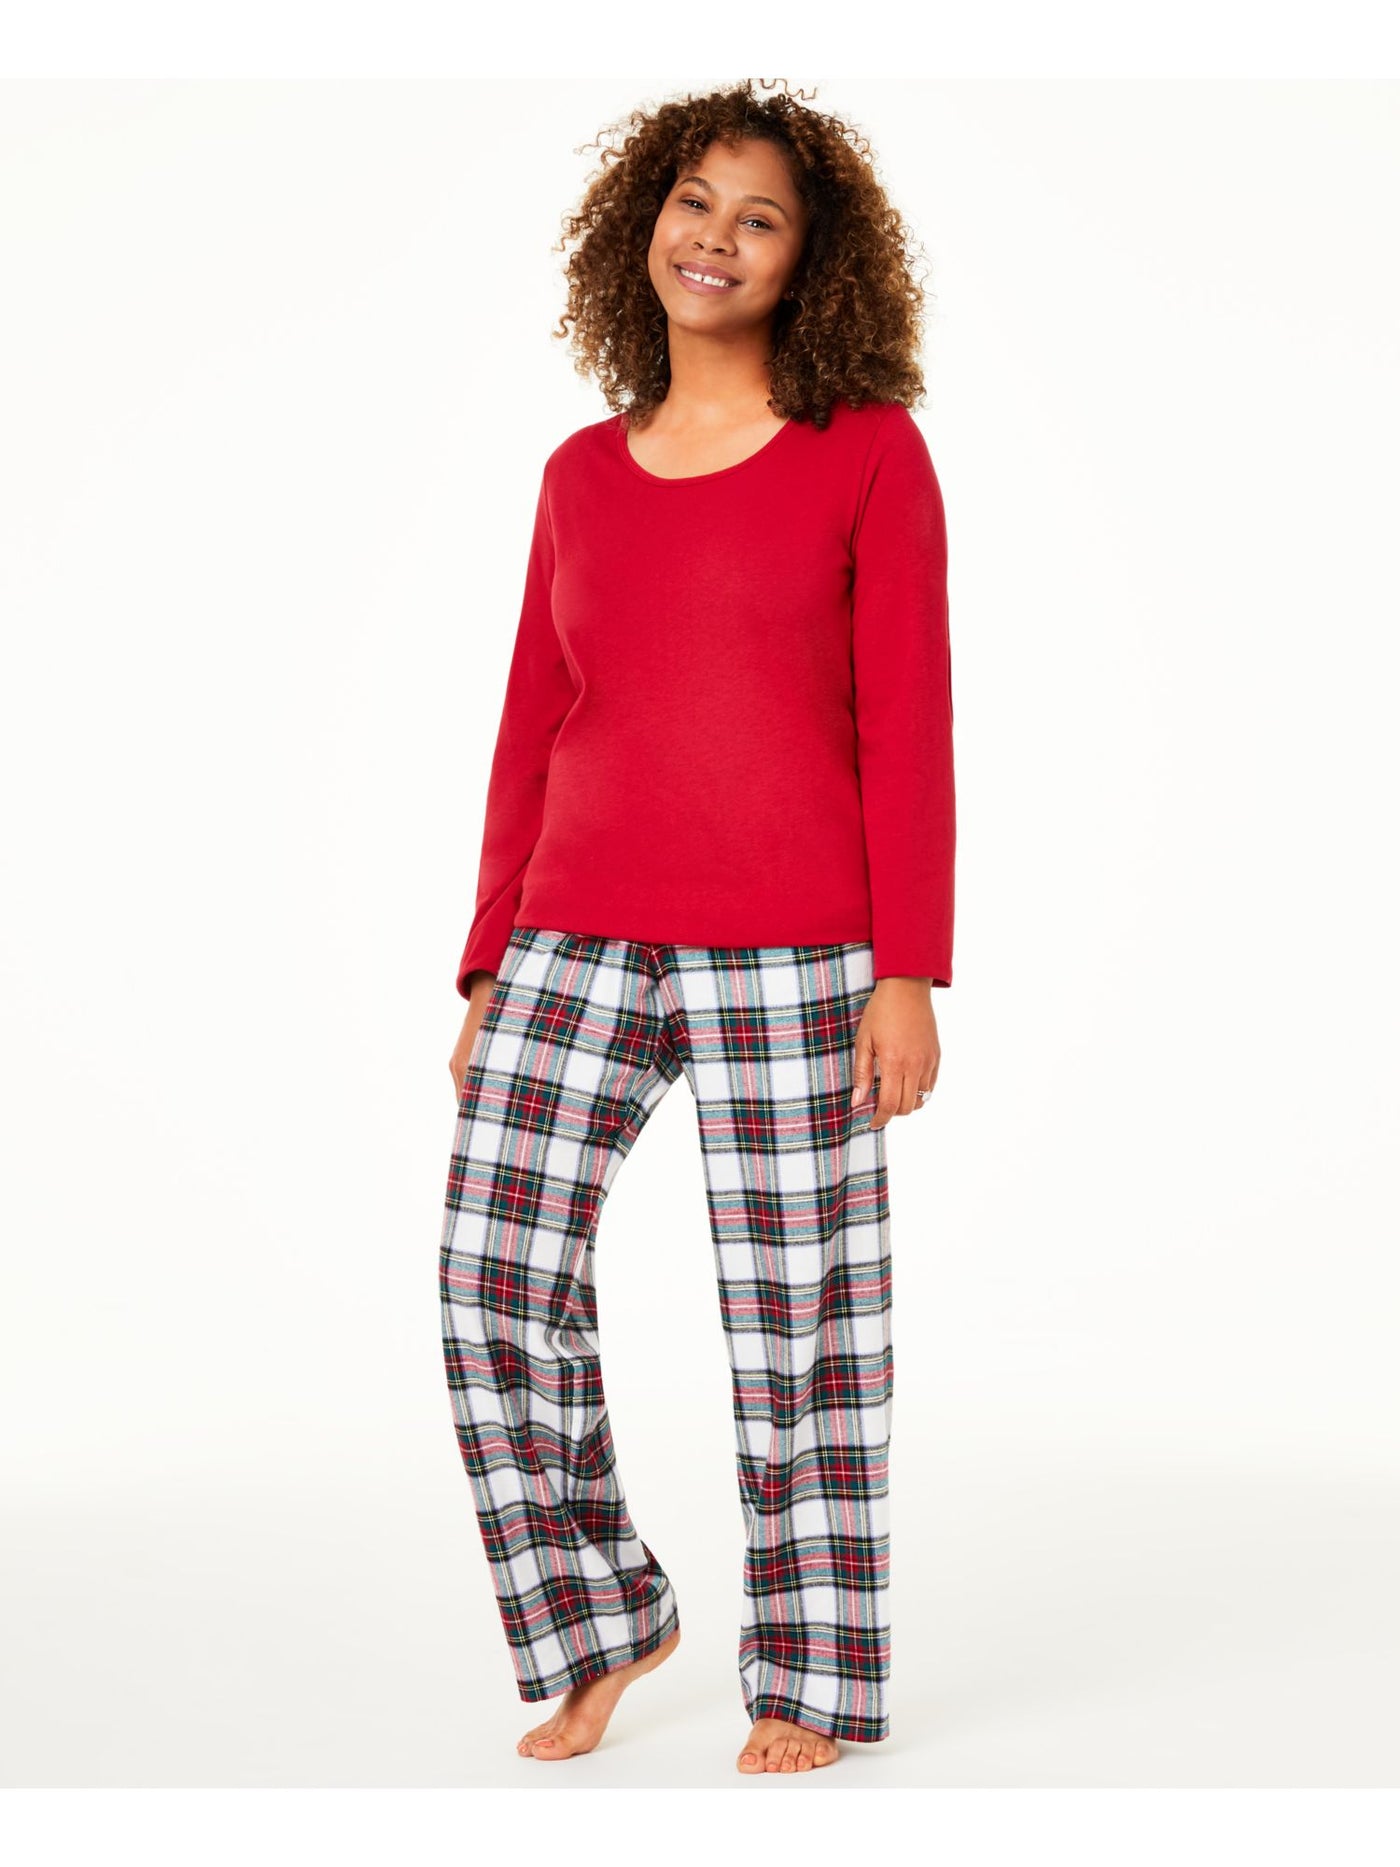 FAMILY PJs Womens Red Elastic Band Long Sleeve T-Shirt Top Straight leg Pants Flannel Pajamas M